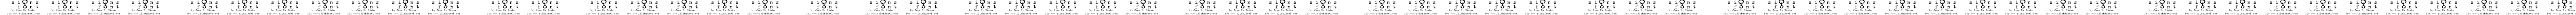 Пример написания шрифтом signs - zeichen 2.0 текста на украинском